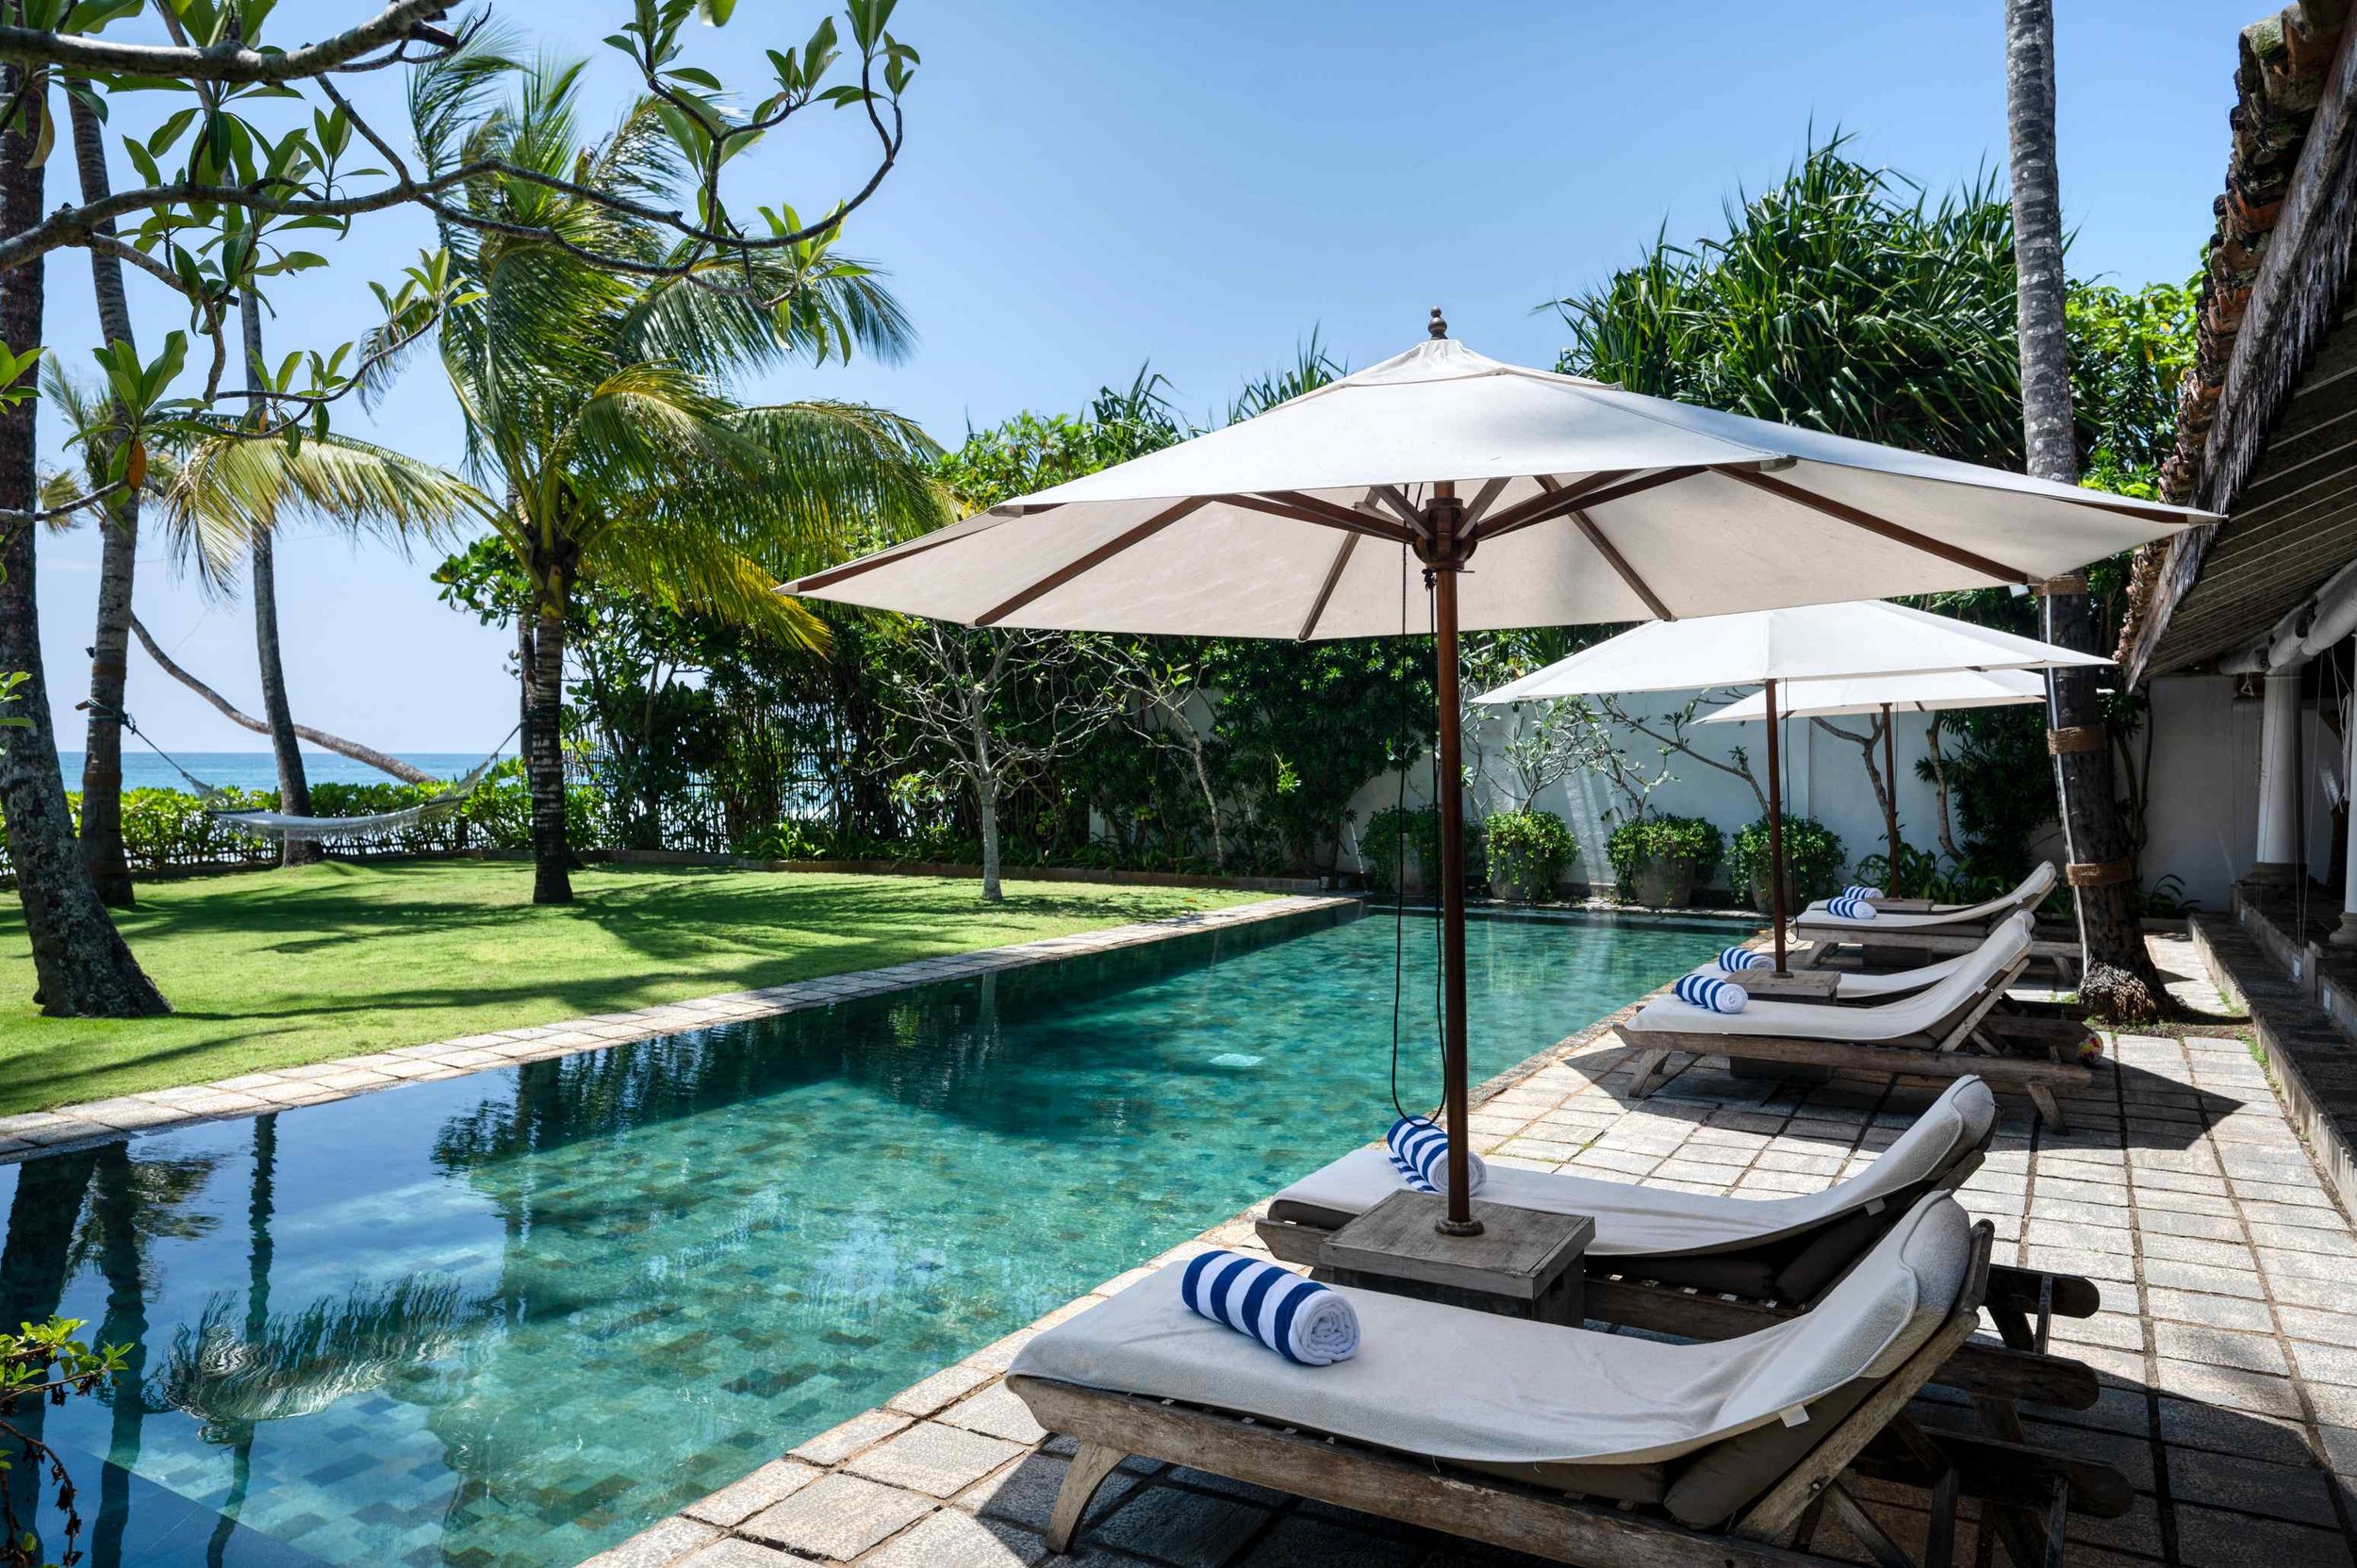 Samudra Beach Villa pool